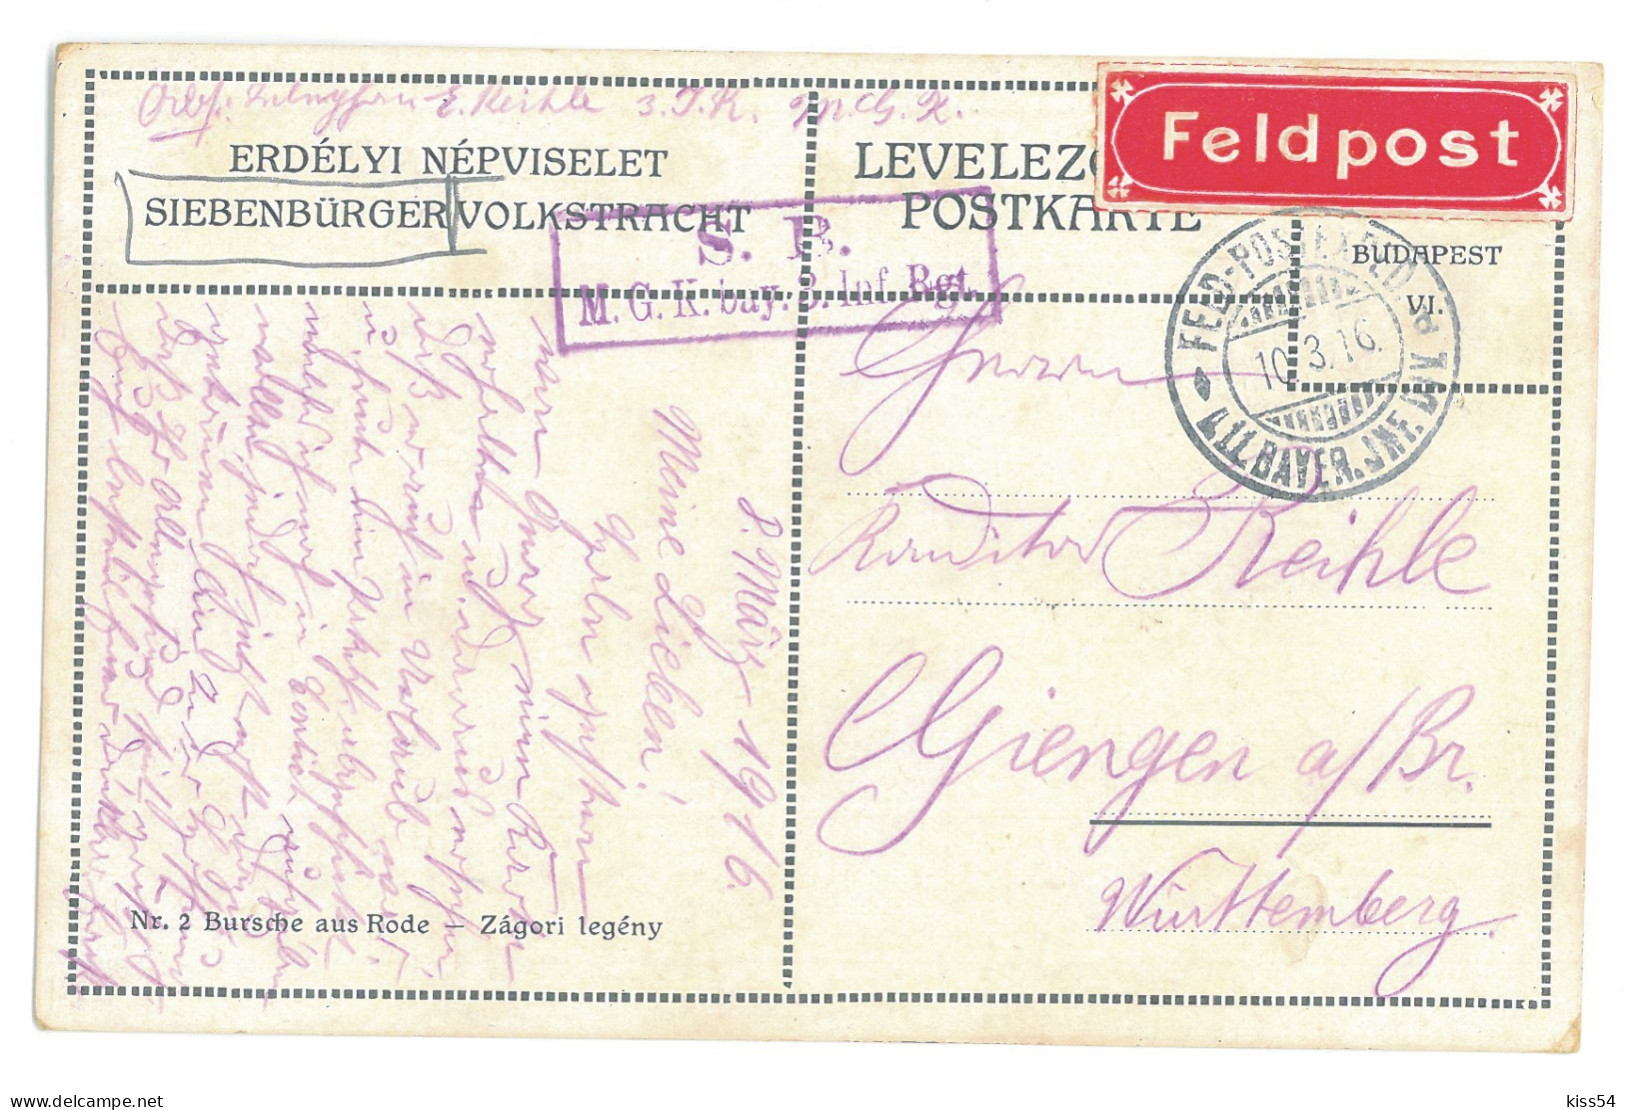 RO 35 - 18718 Ardeal ETHNIC FAMILY, Romania - Old Postcard, CENSOR - Used - 1916 - Roumanie